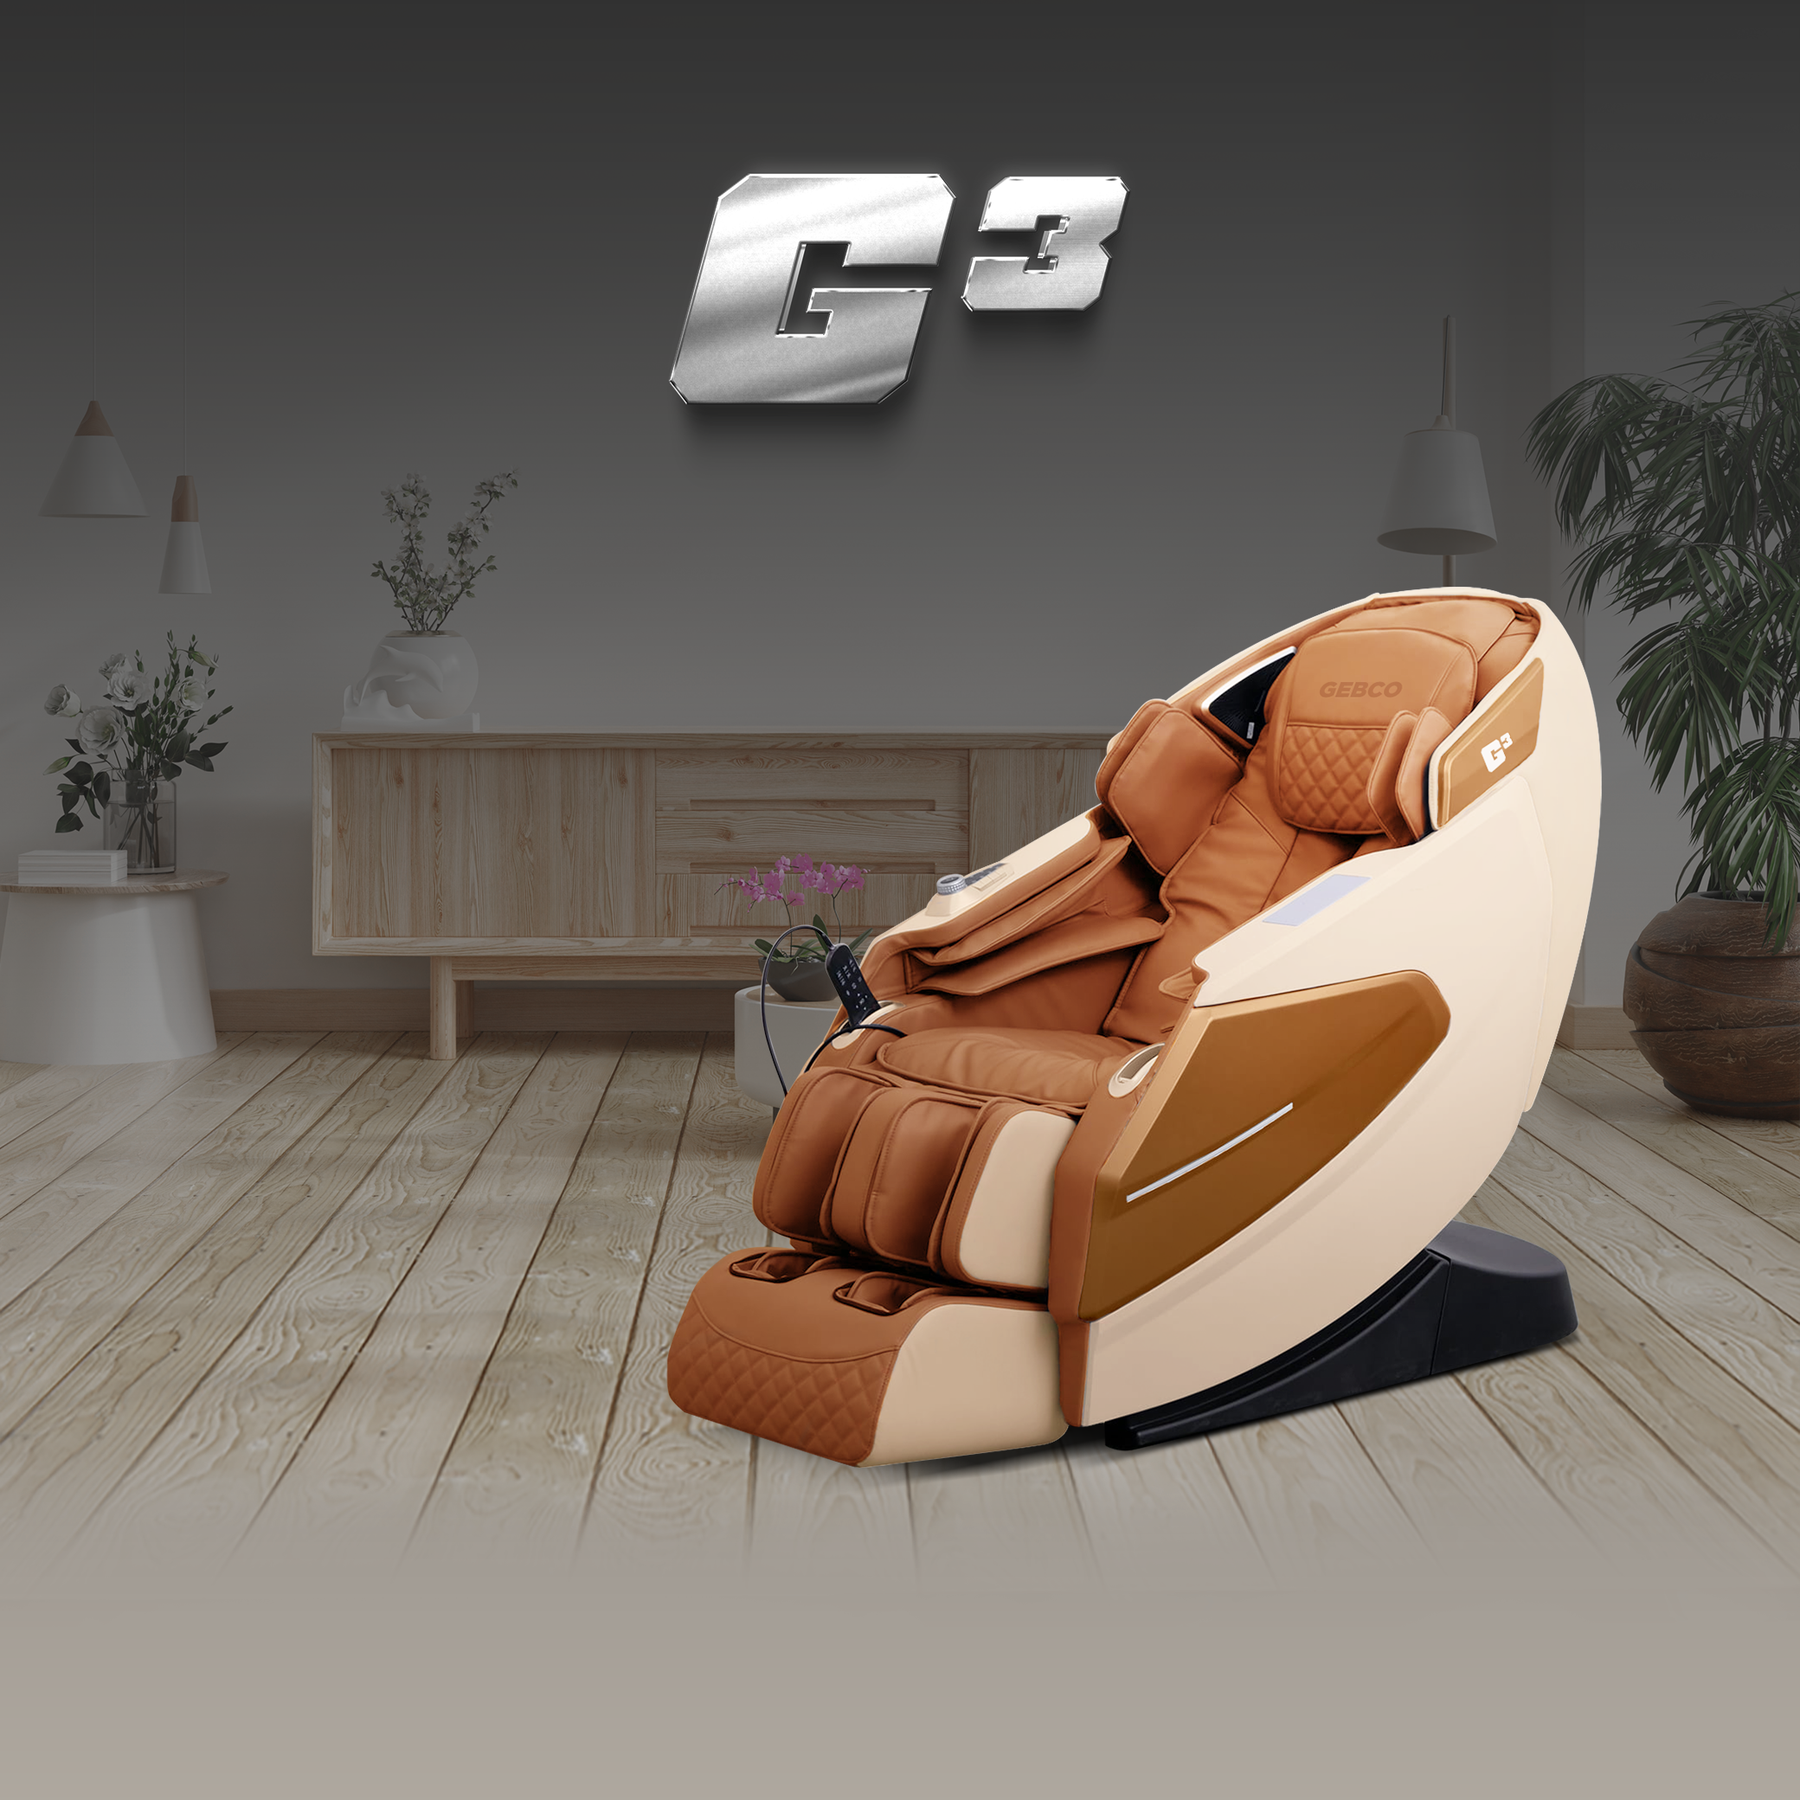 G3 Voice Control Massage Chair (Rose Gold Copper)